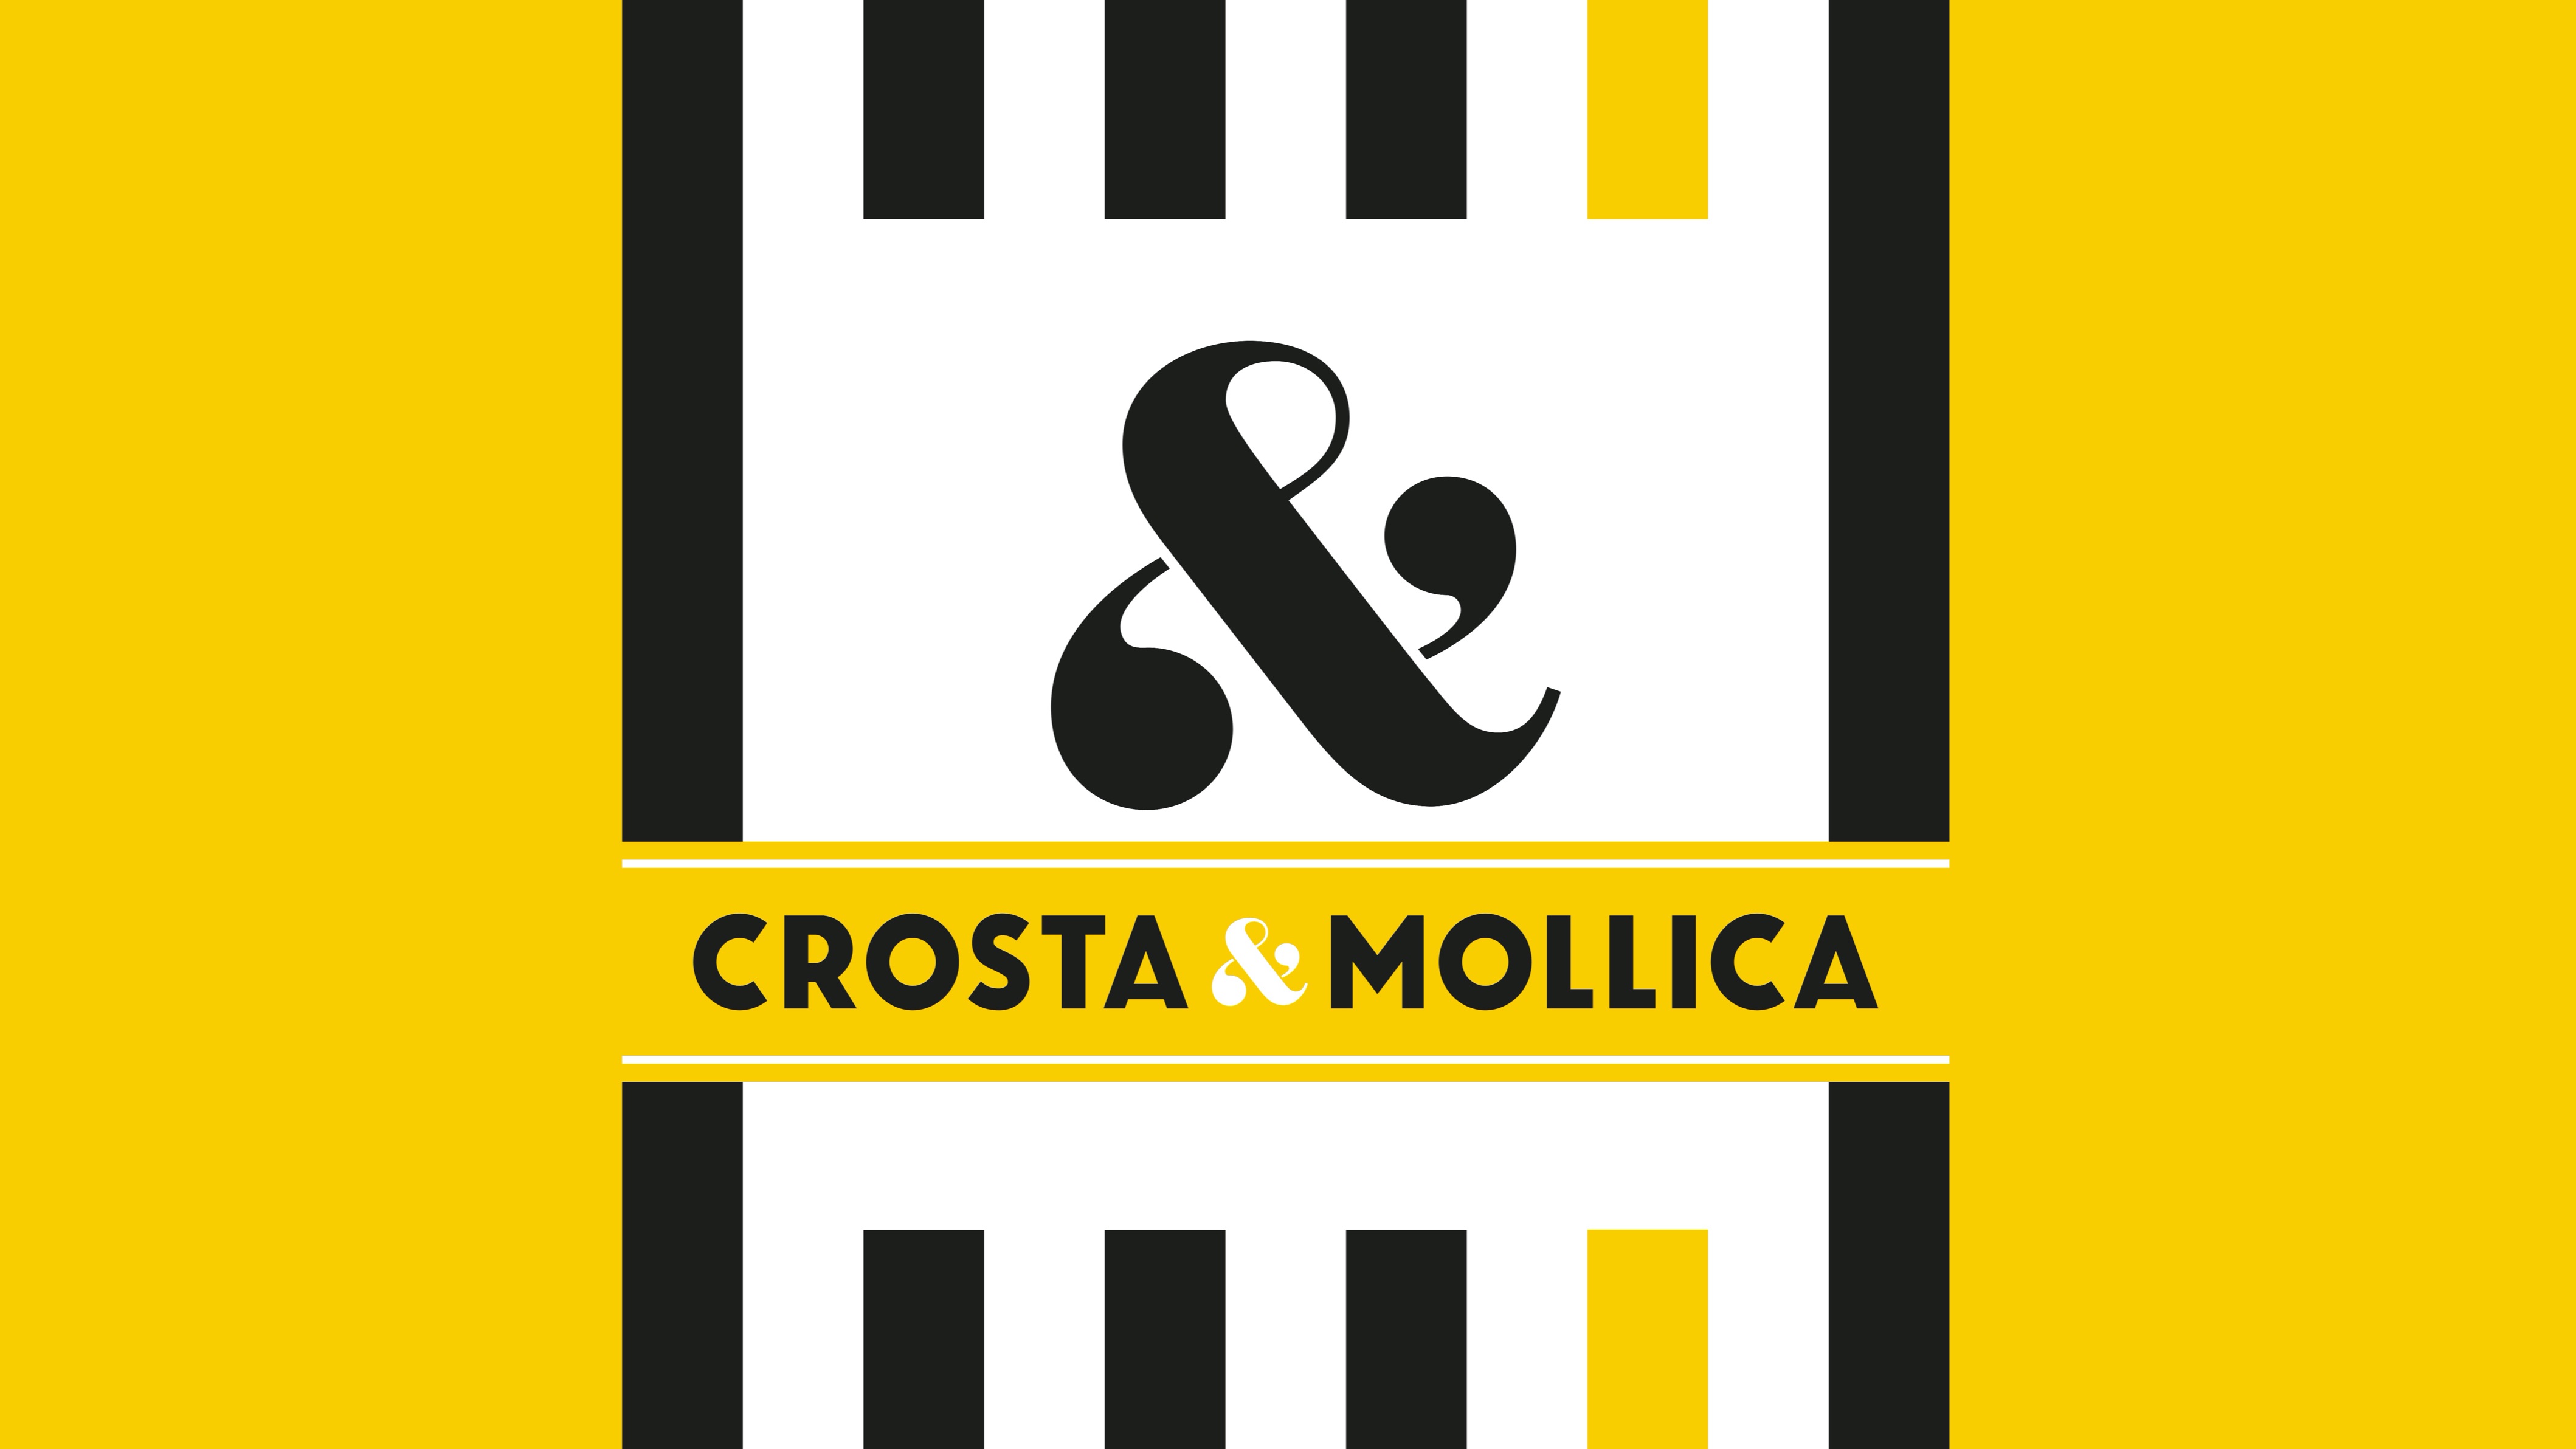 Crosta & Mollica Integrated Creative Campaign by Bluemarlin